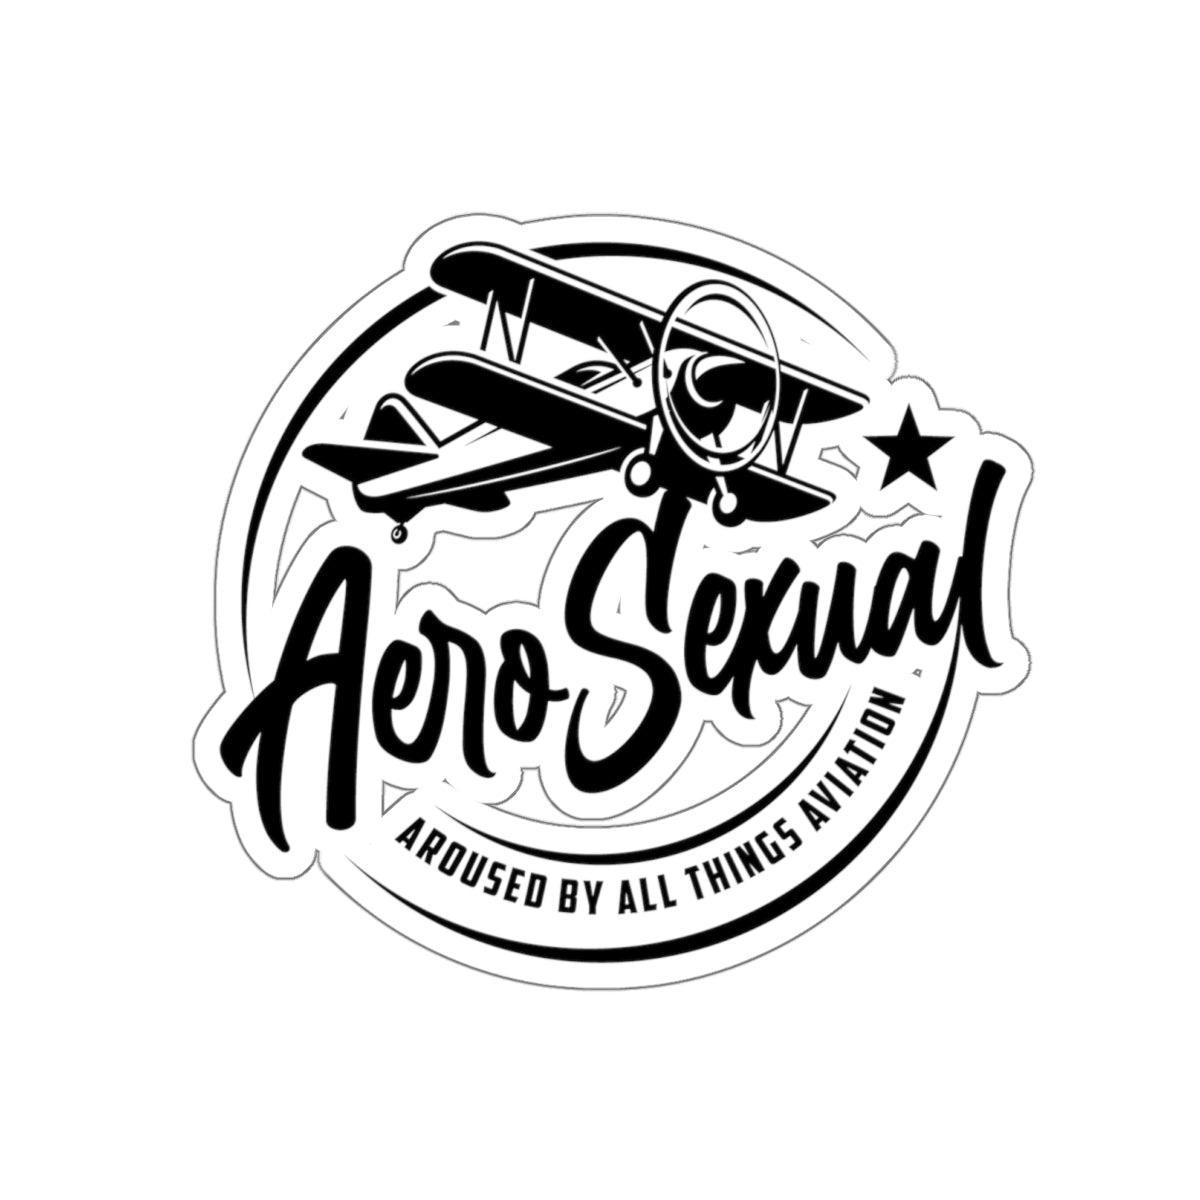 Aerosexual Club Die-Cut Stickers (biplane)